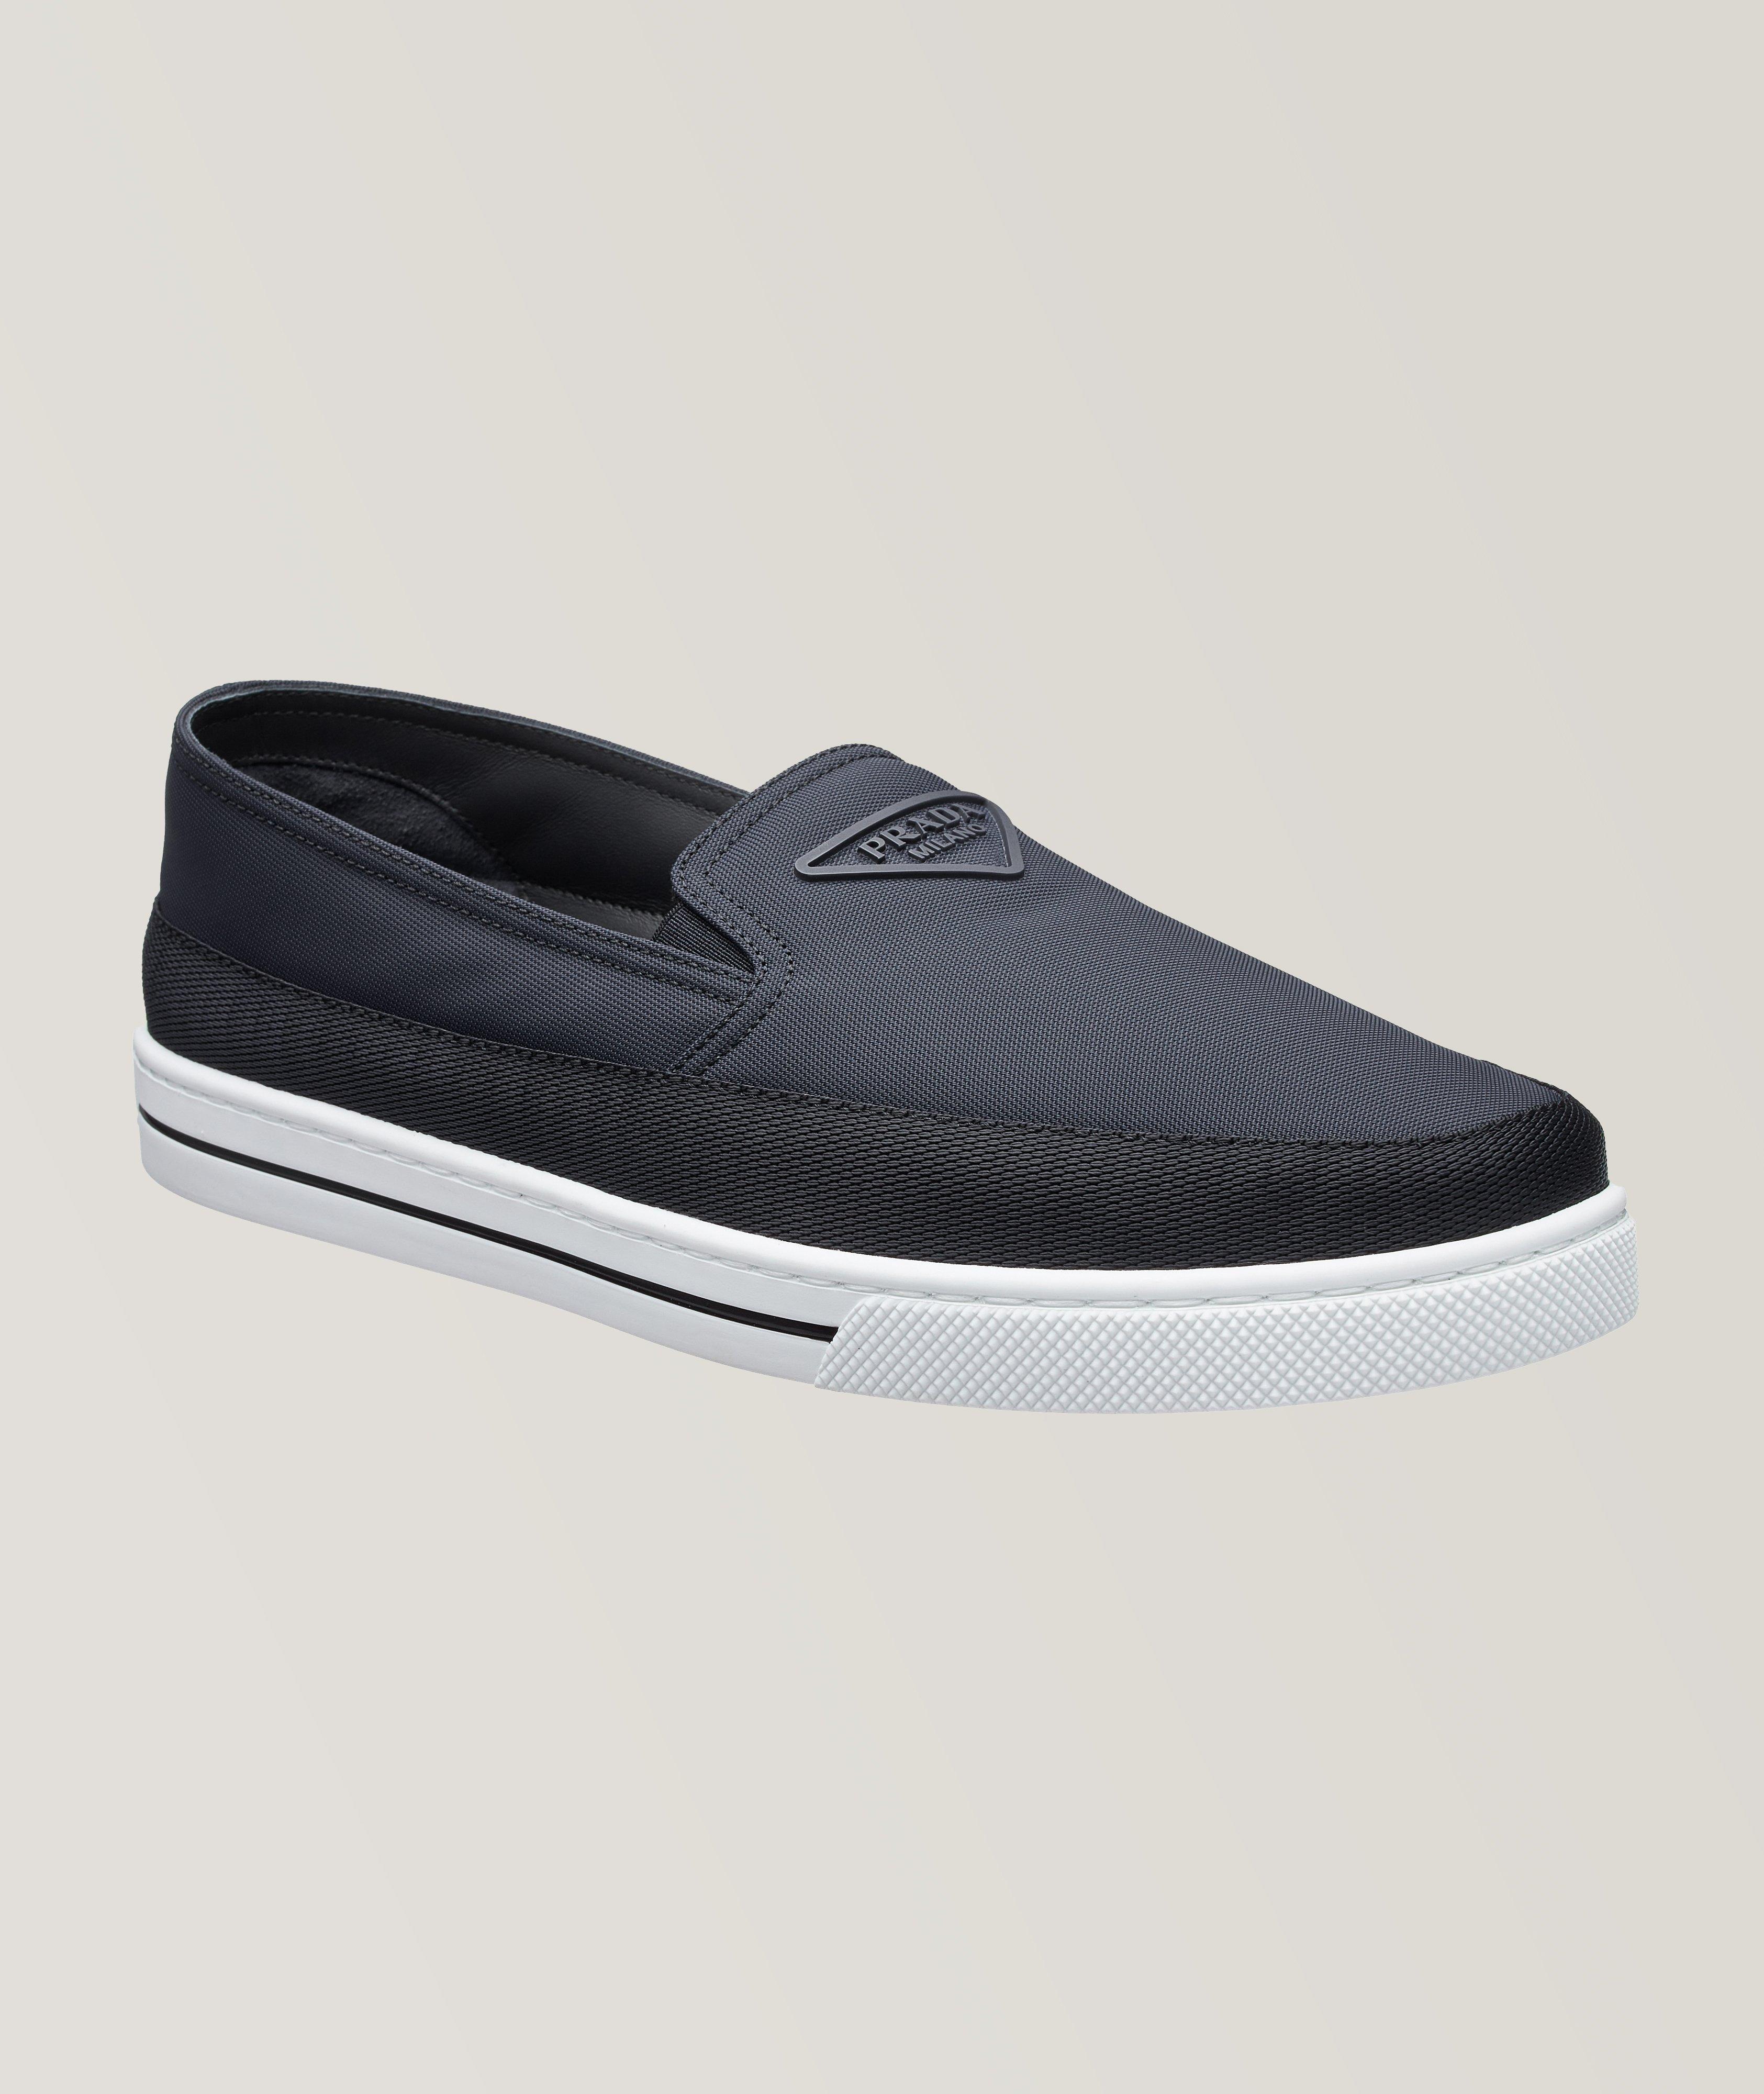 Prada Nylon Slip-On Sneakers, Casual Shoes